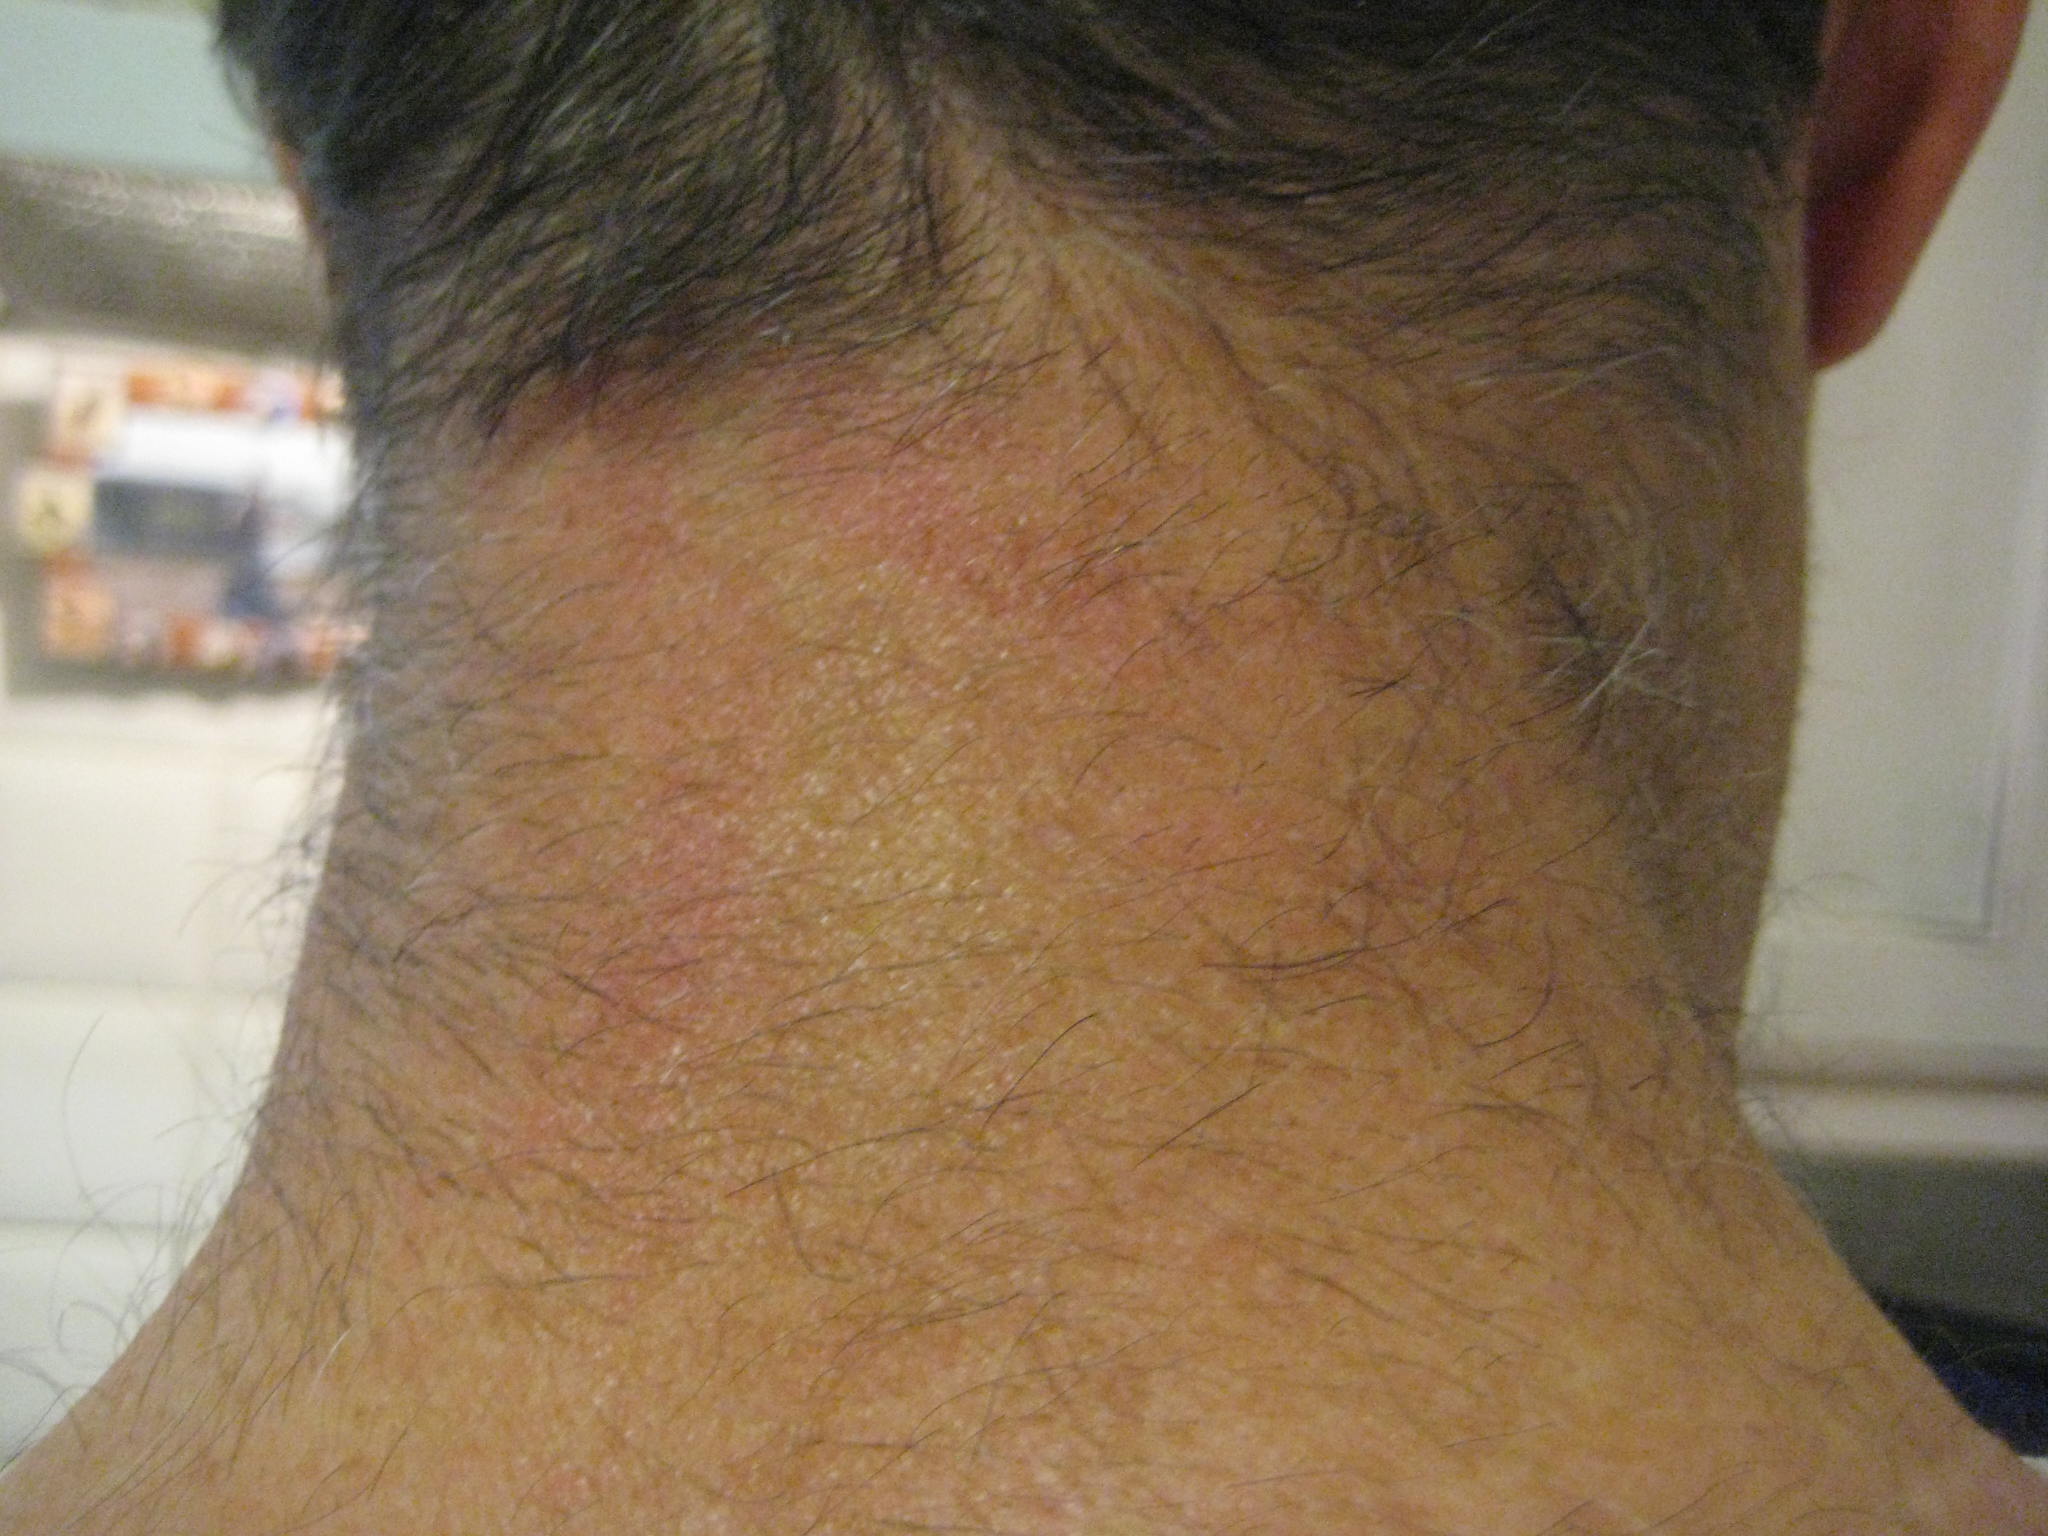 swollen lymph node back of neck